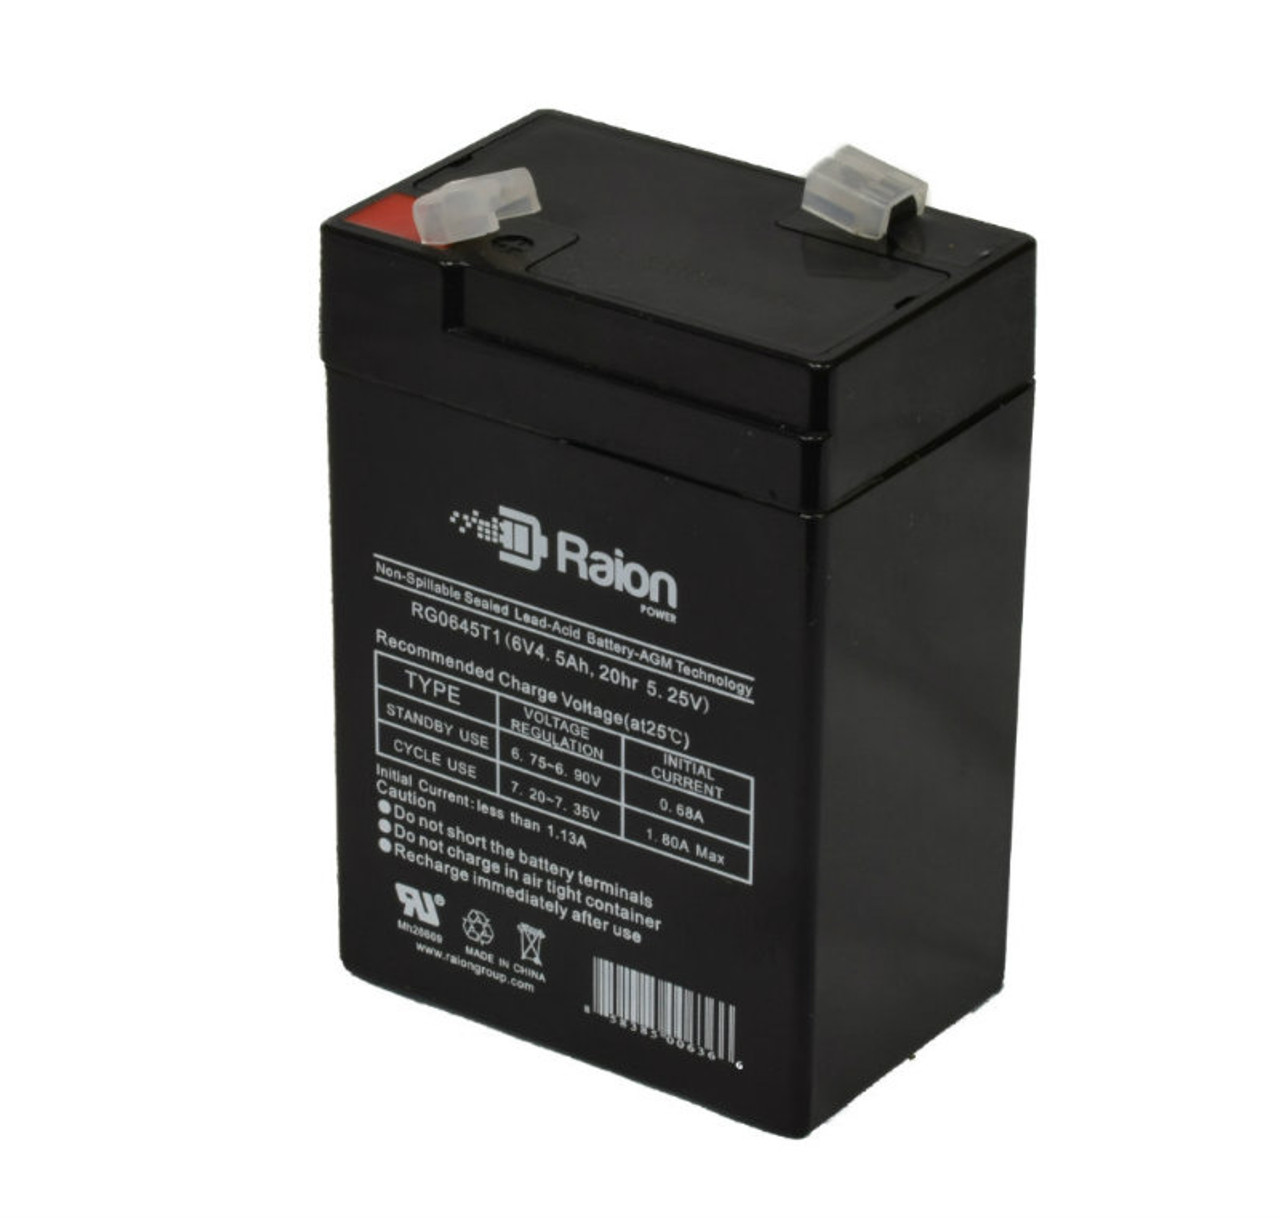 Raion Power RG0645T1 6V 4.5Ah Replacement Battery Cartridge for PBQ 4.5-6